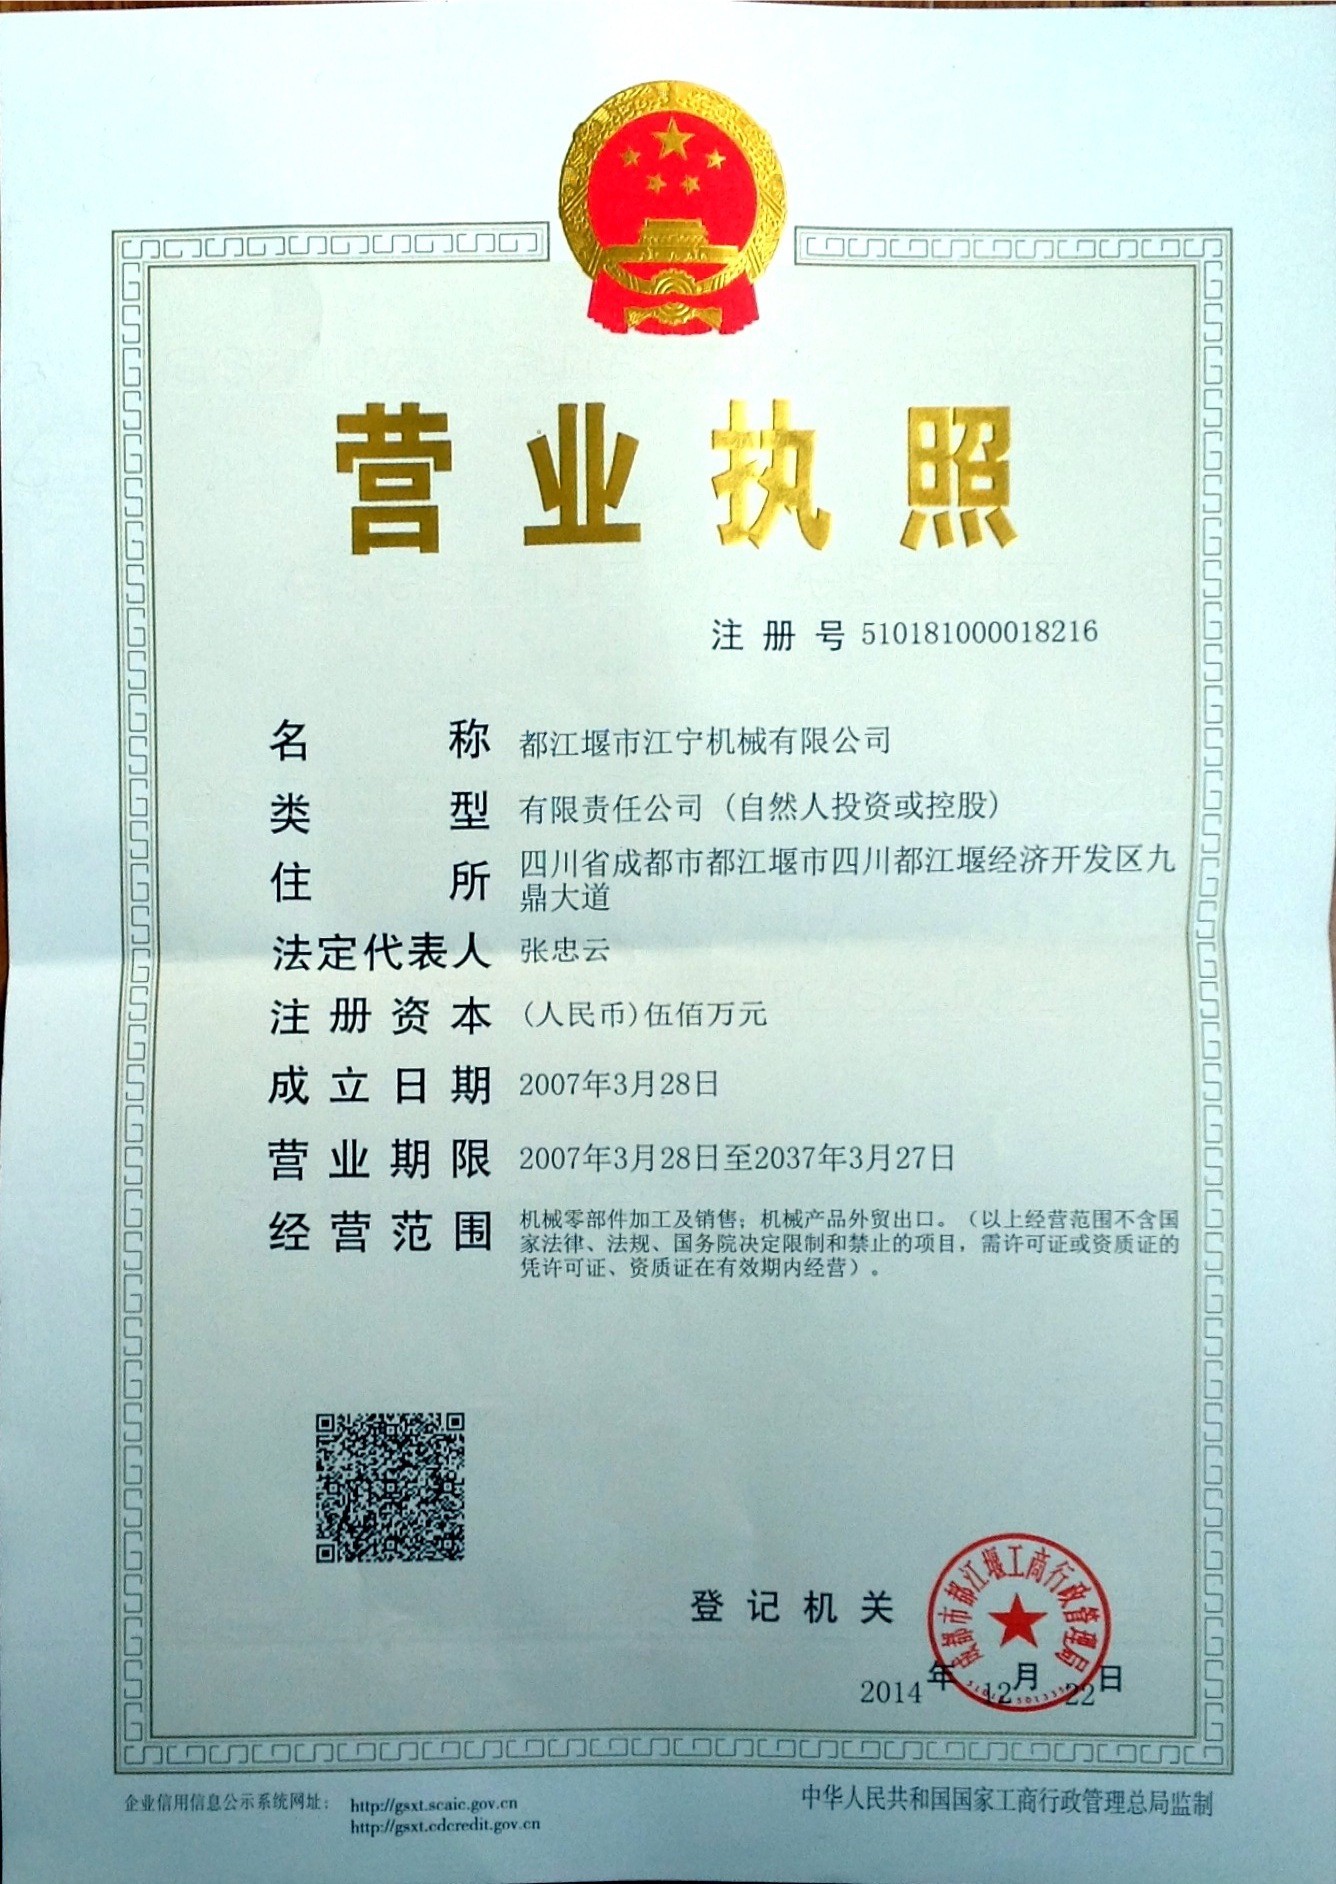 China Dujiangyan Joiner Machinery Co., Ltd. Certification